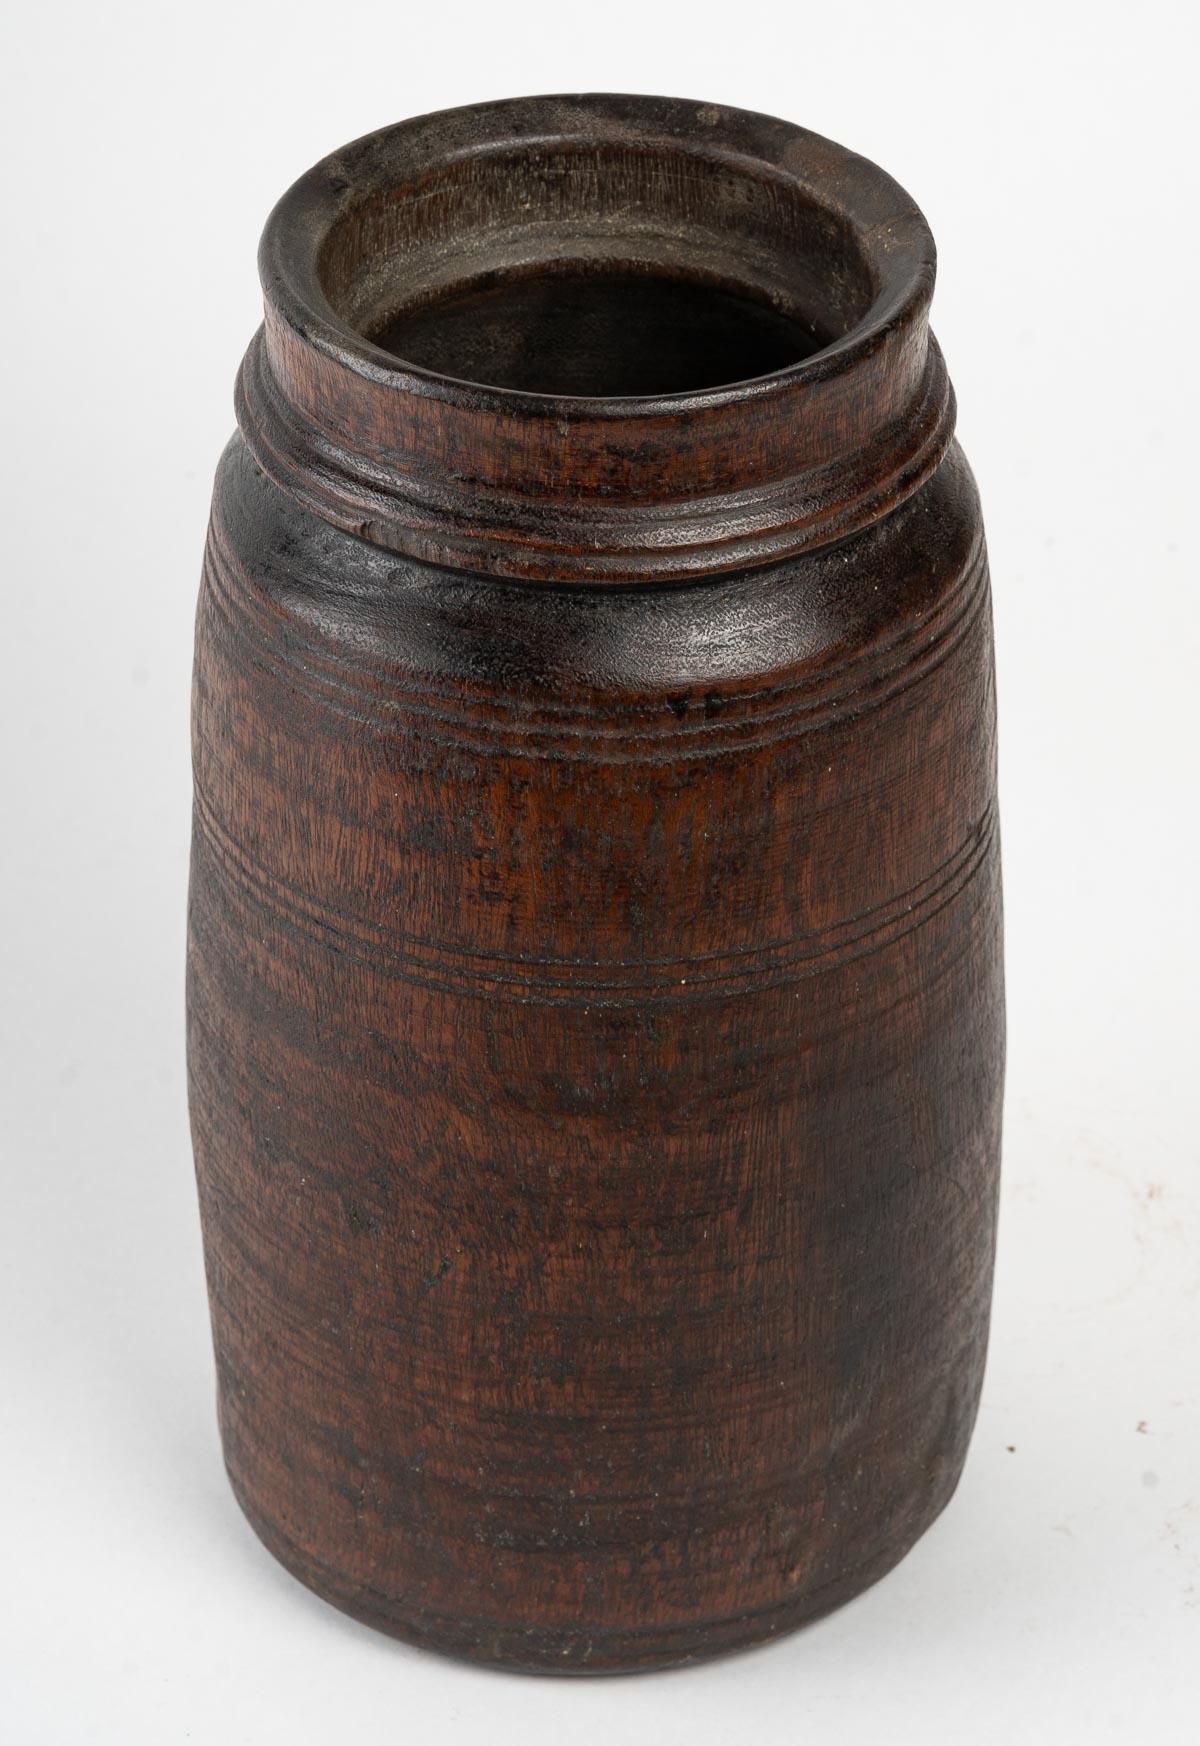 Vase für afrikanische Kunst, Holz, 20. Jahrhundert.
Maße: H: 29 cm, T: 17 cm.